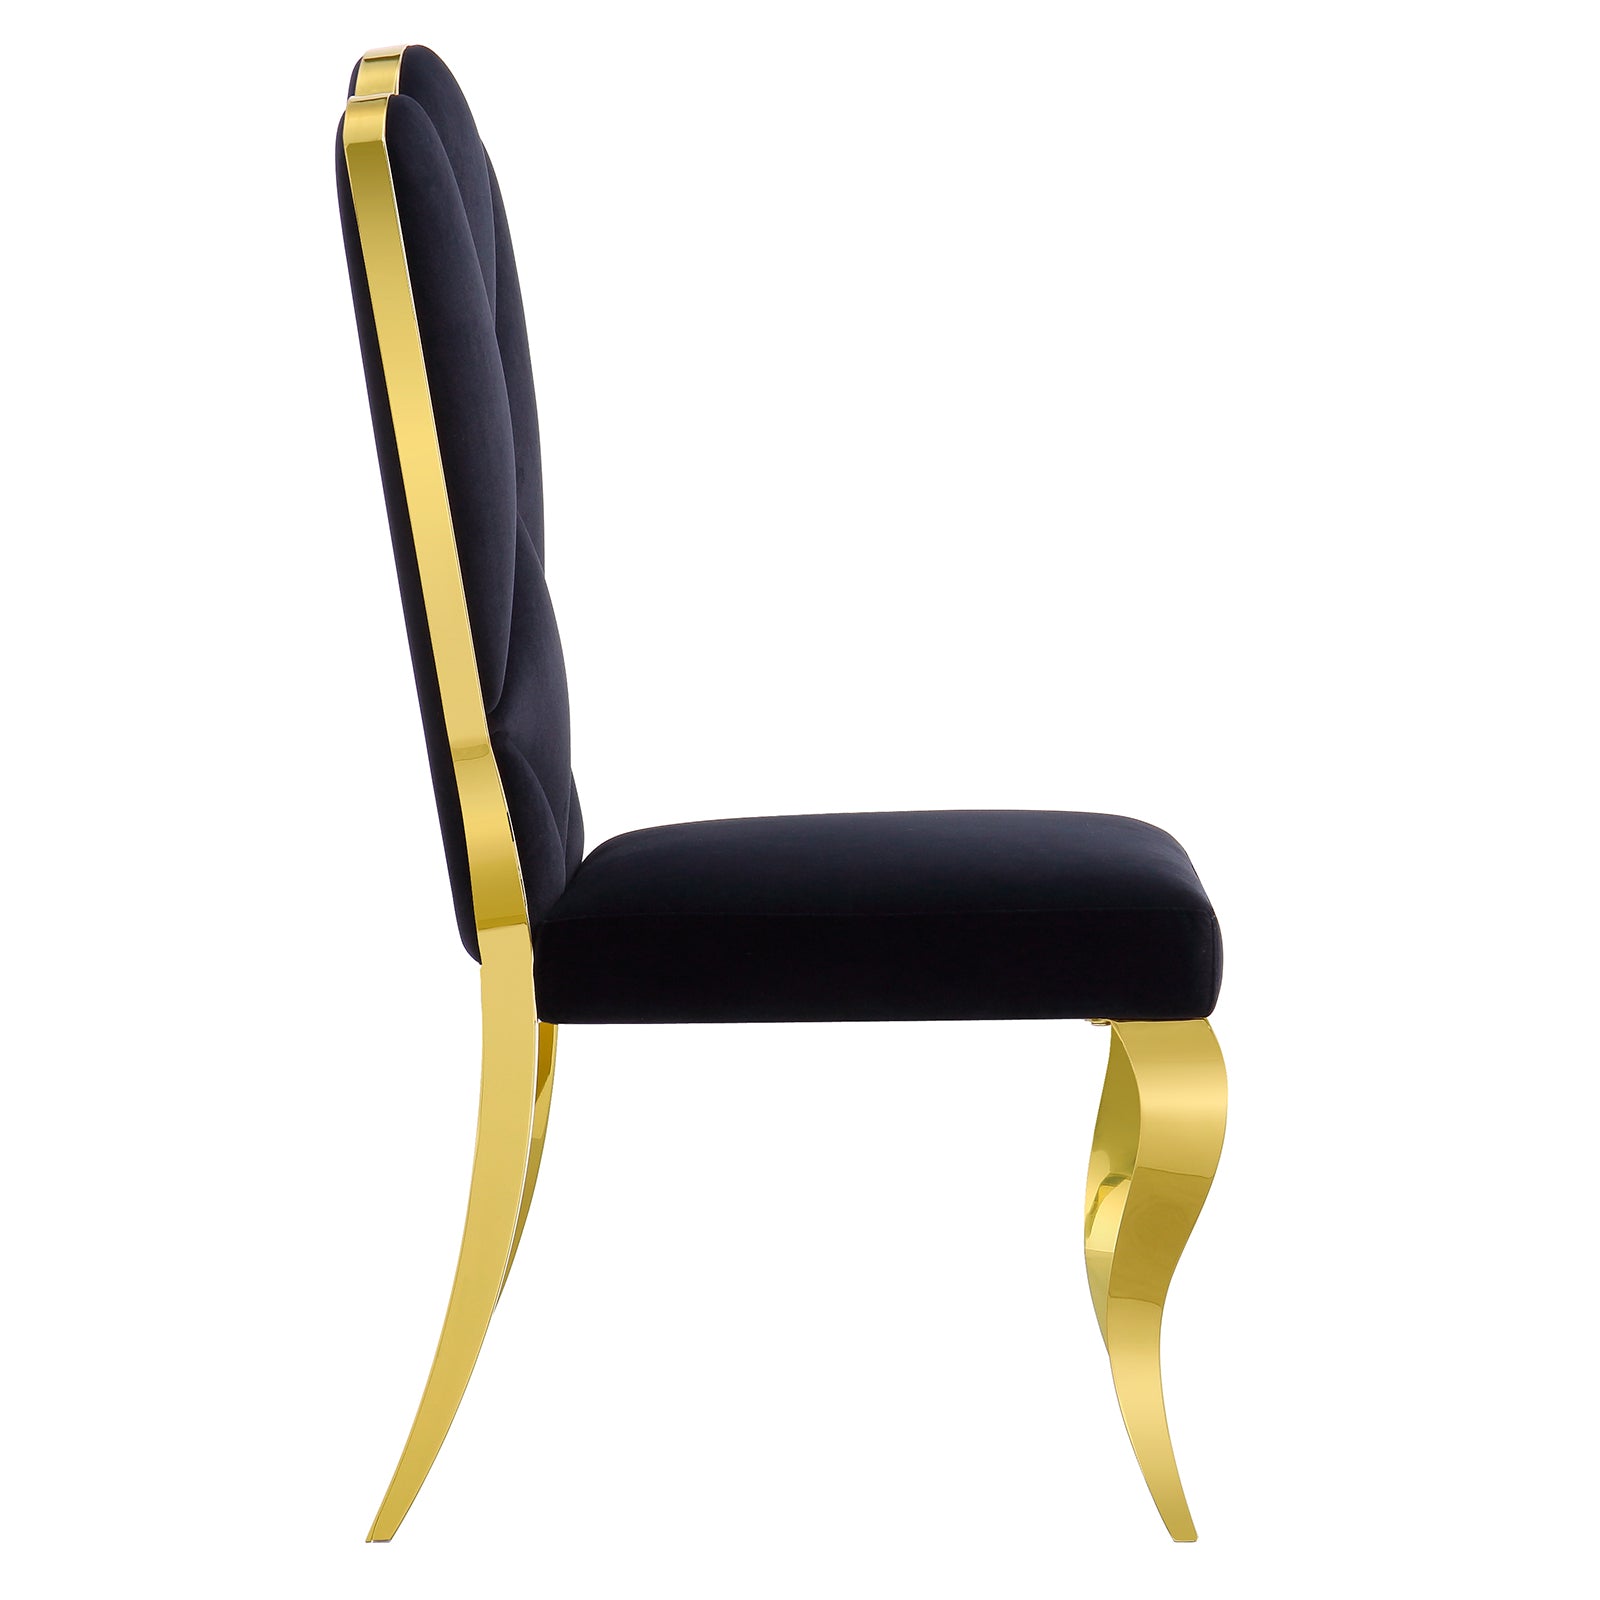 Black velvet dining chairs | Cloud backrest design | Gold Metal legs | C140